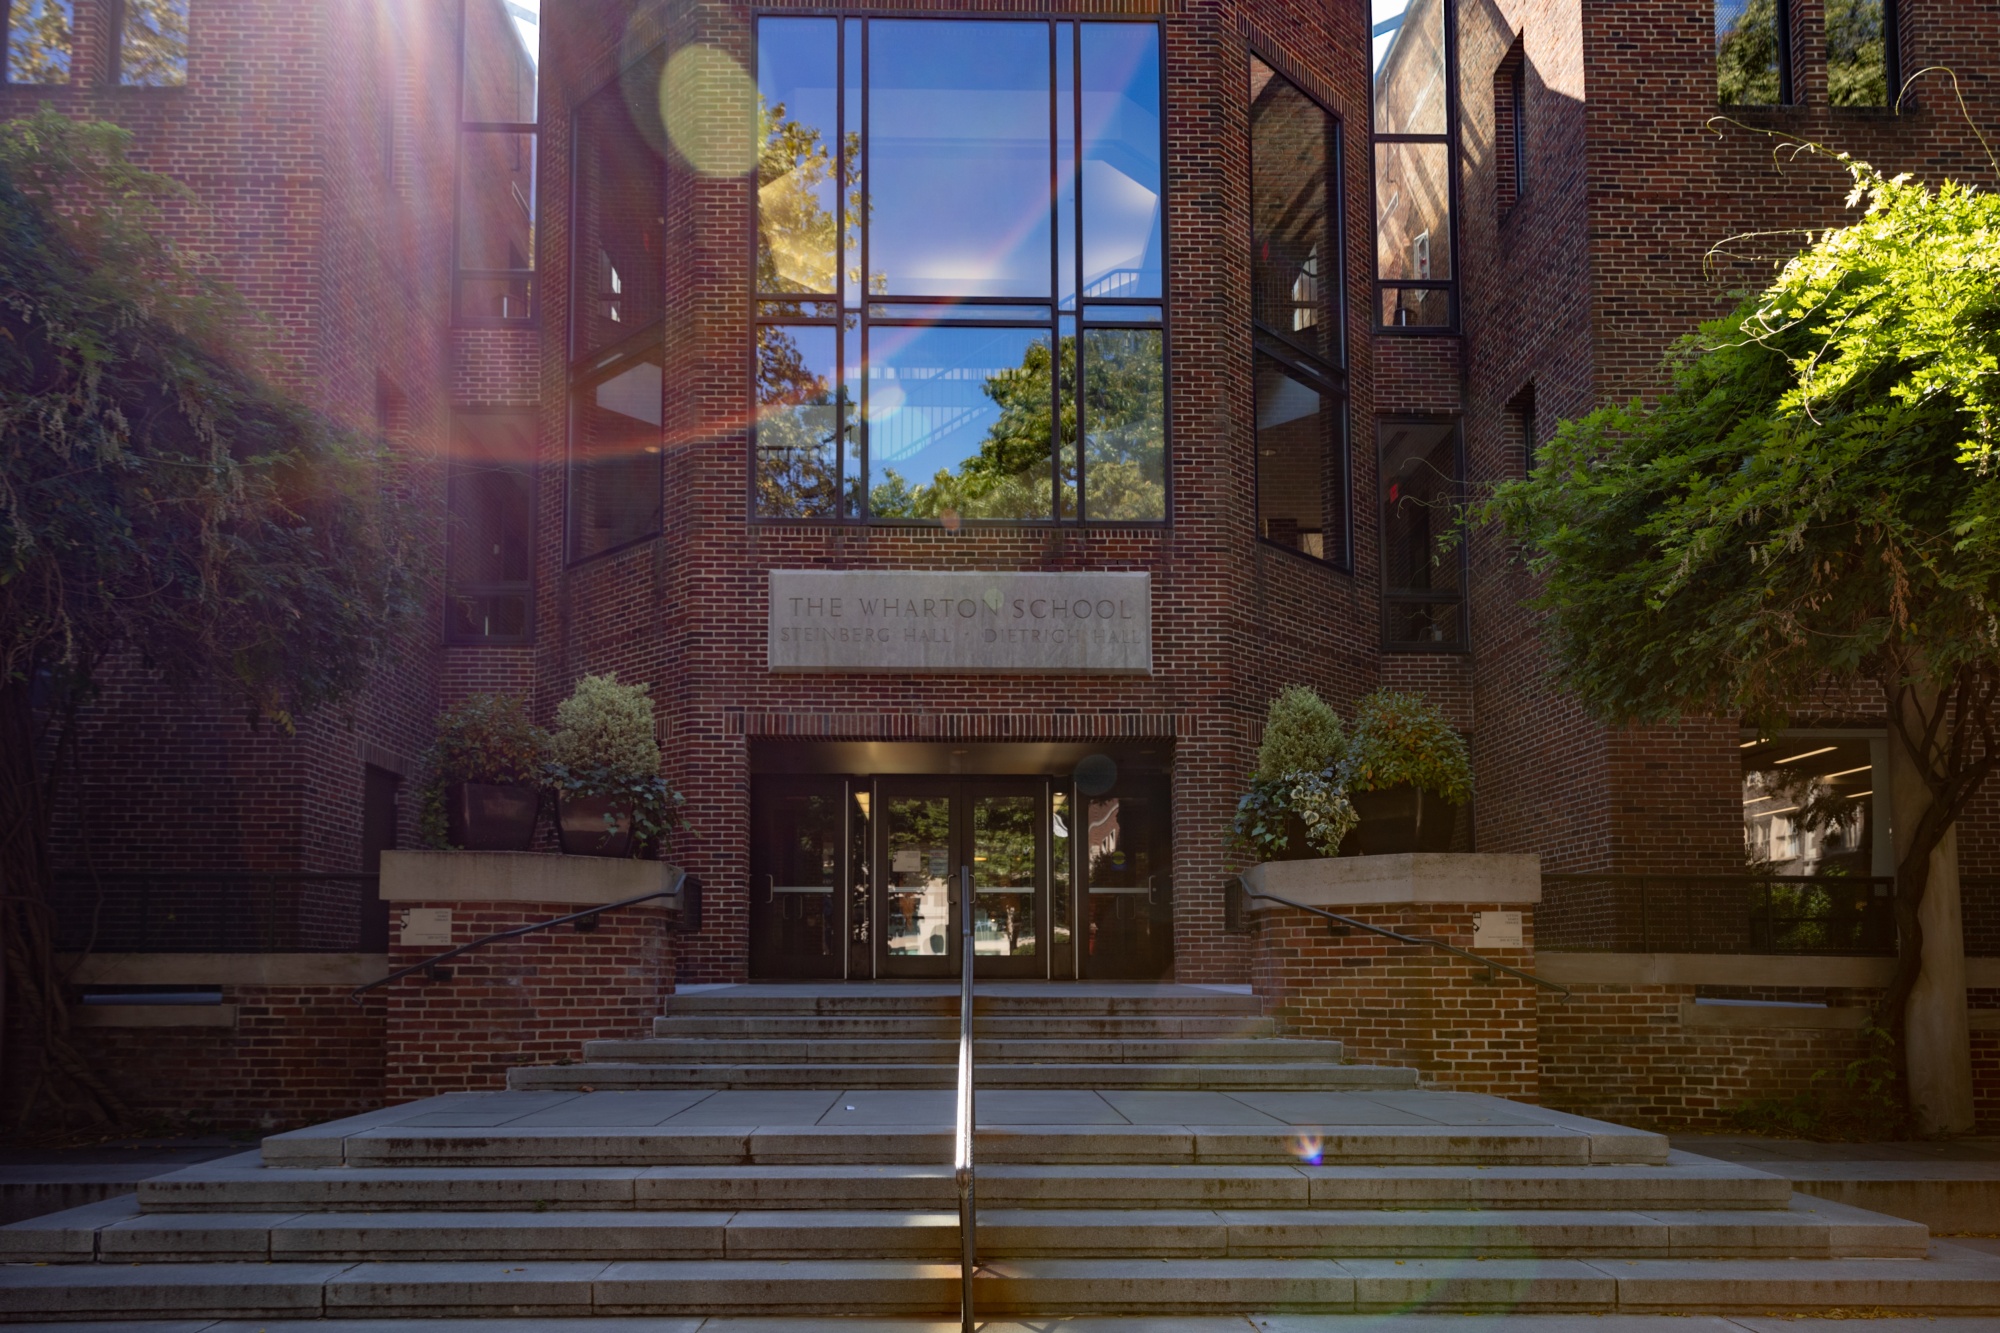 The Wharton School of the University of Pennsylvania in Philadelphia.